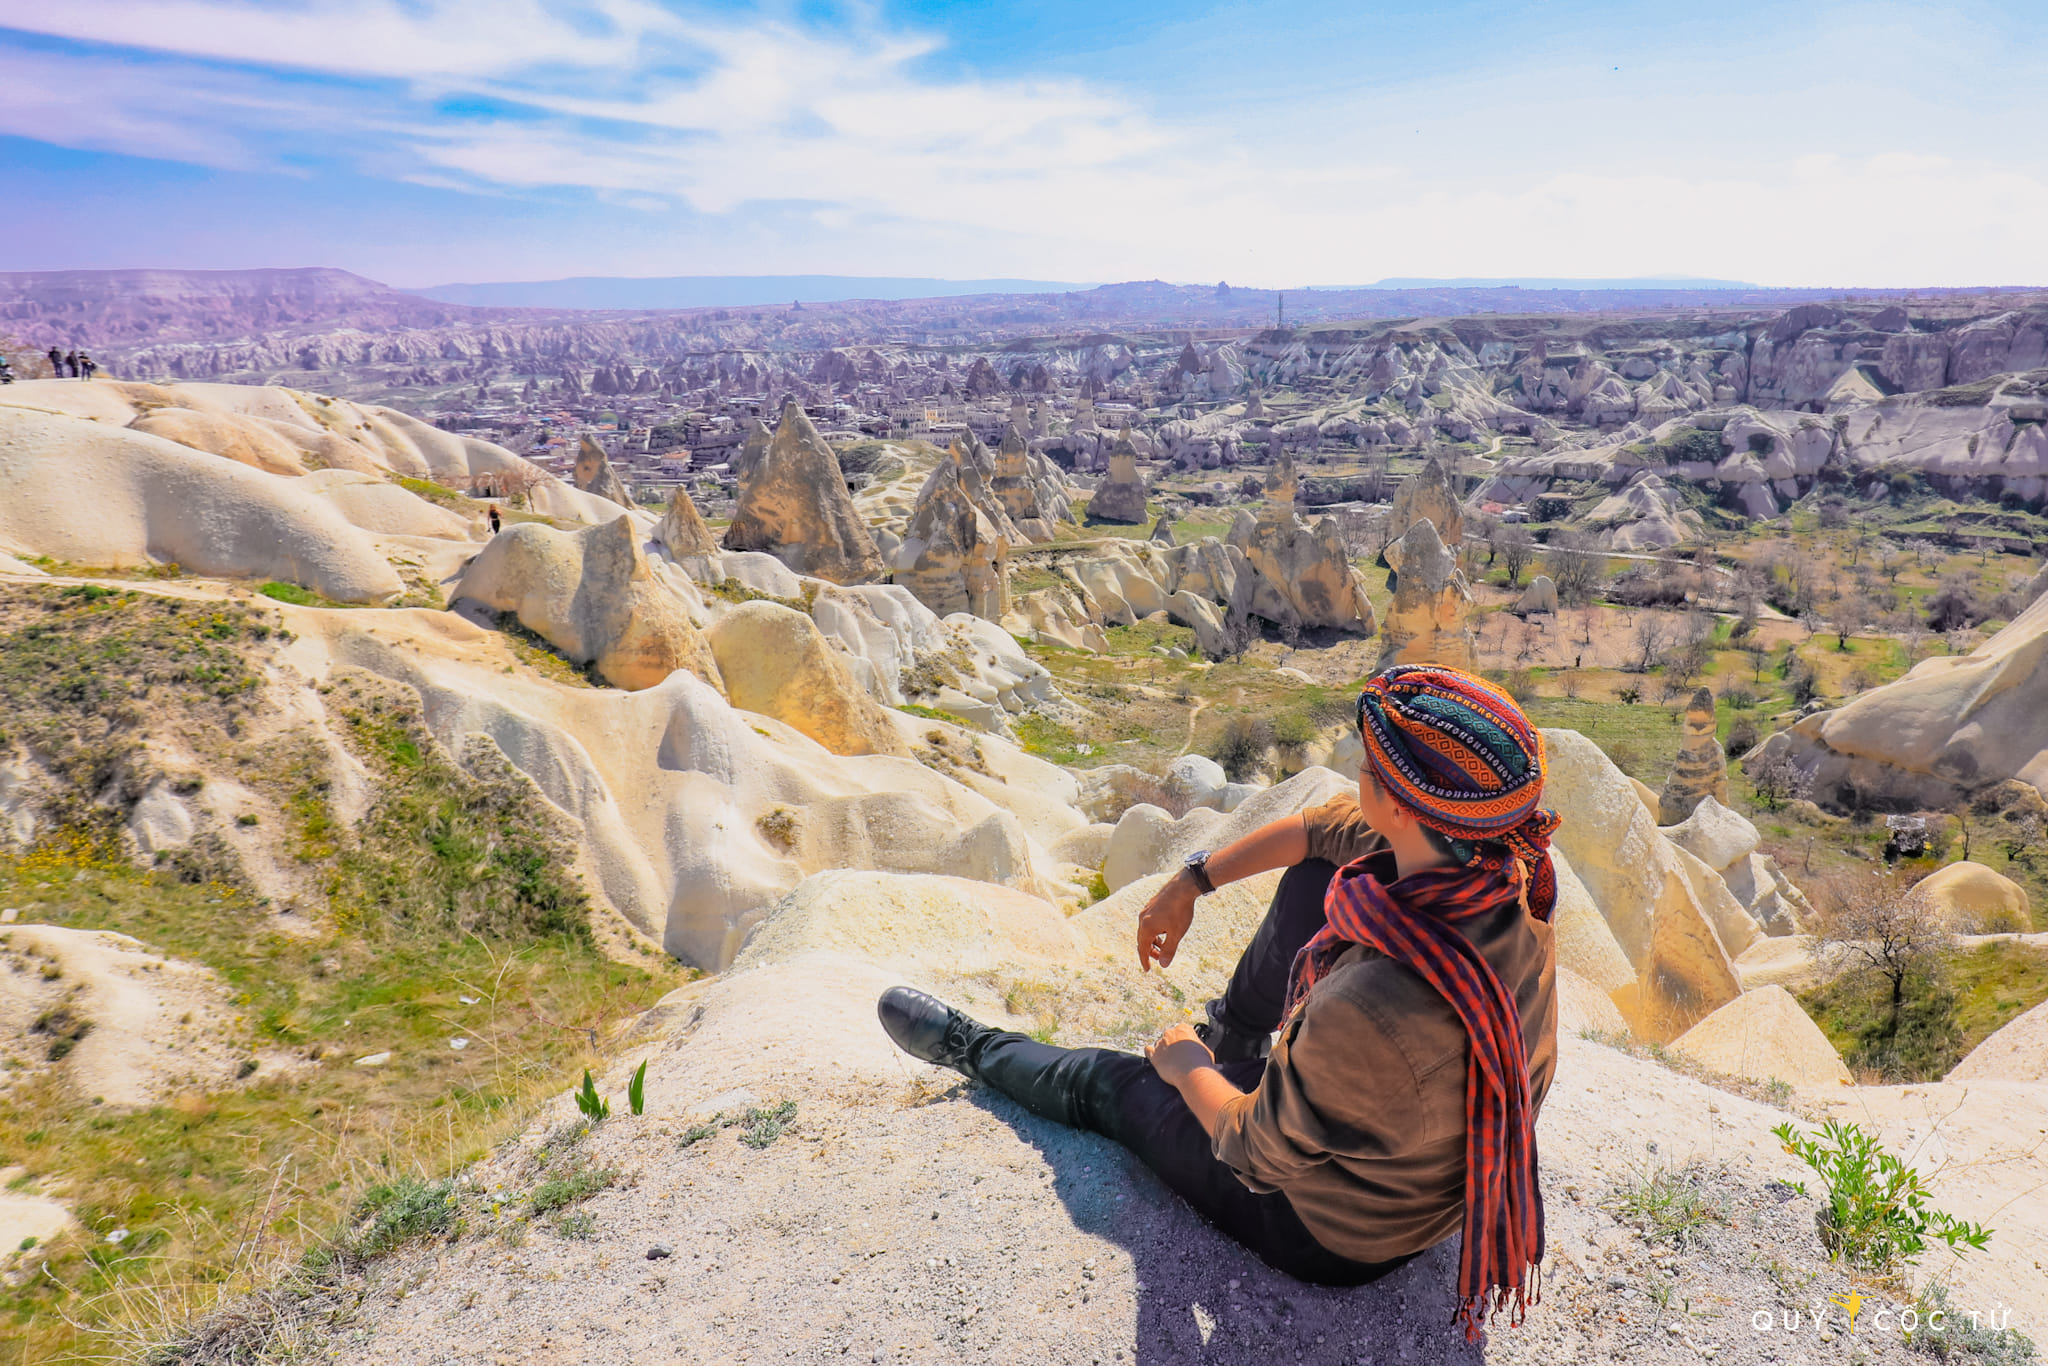 cappadocia – thu thach dung khi giua nhung tang khong - 3